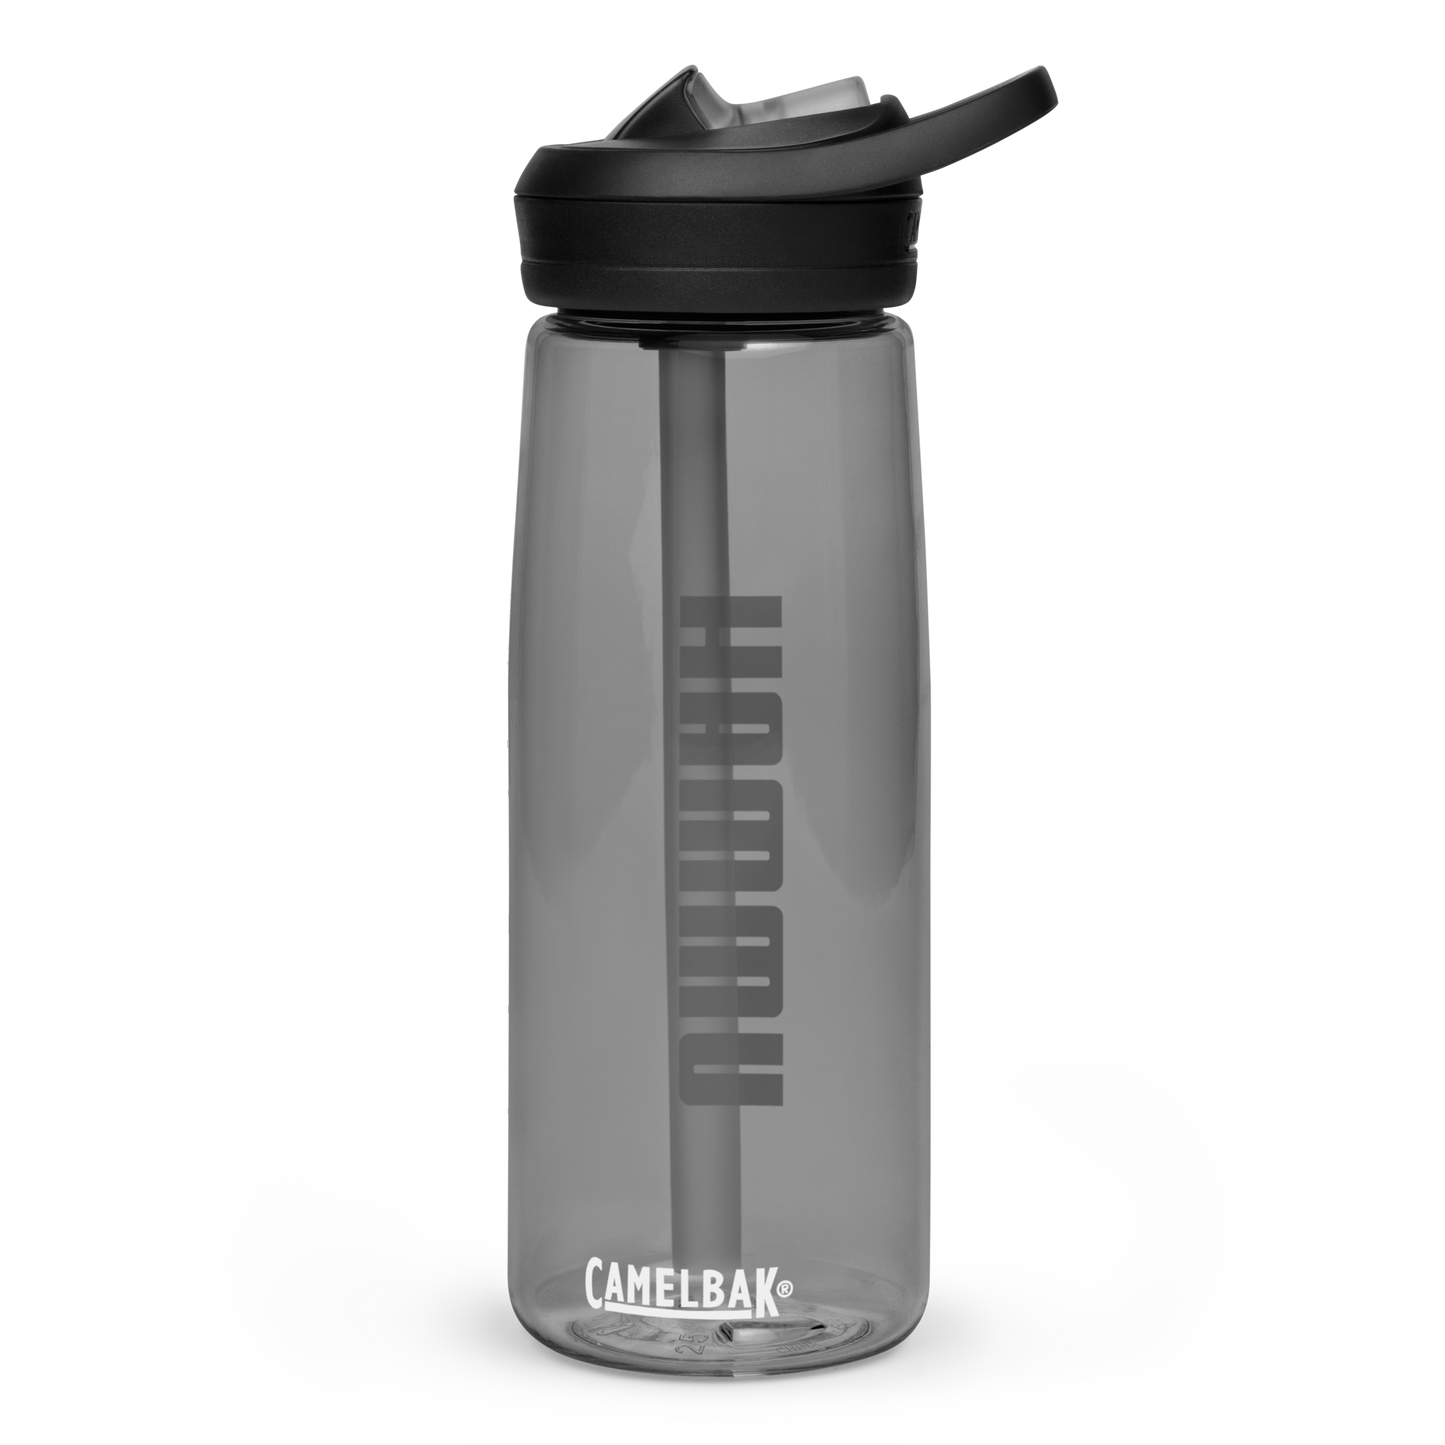 DRINK Water Bottle w/ Lid and Straw - UMMAH (Centered/Large) - Black